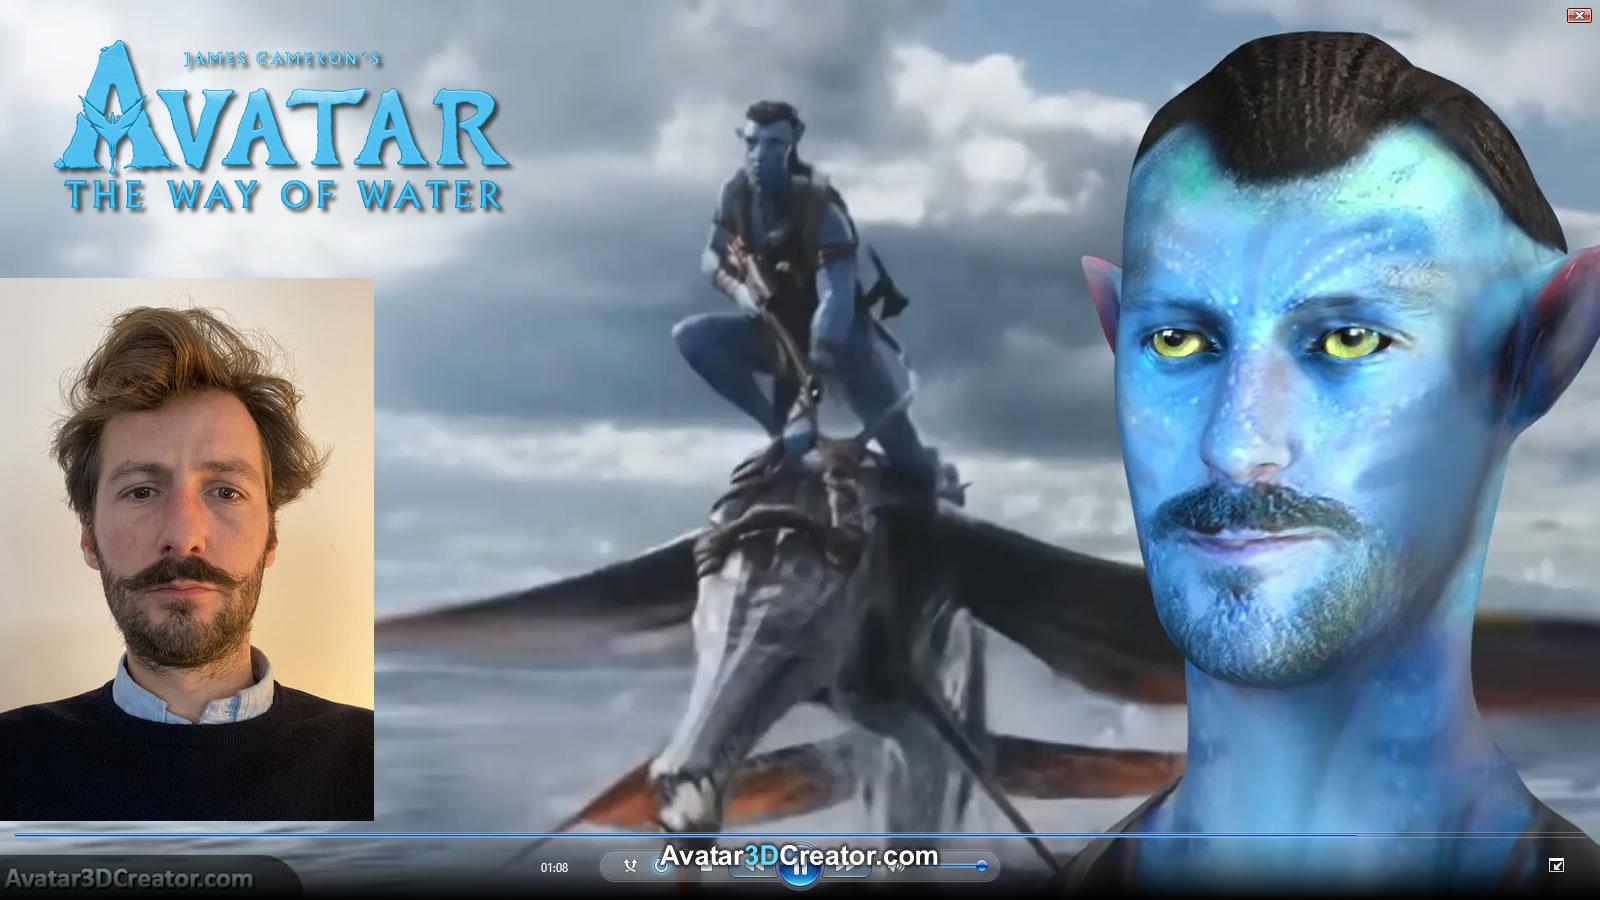 3D Avatar – Half Body Avatar Film. Avatarize yourself